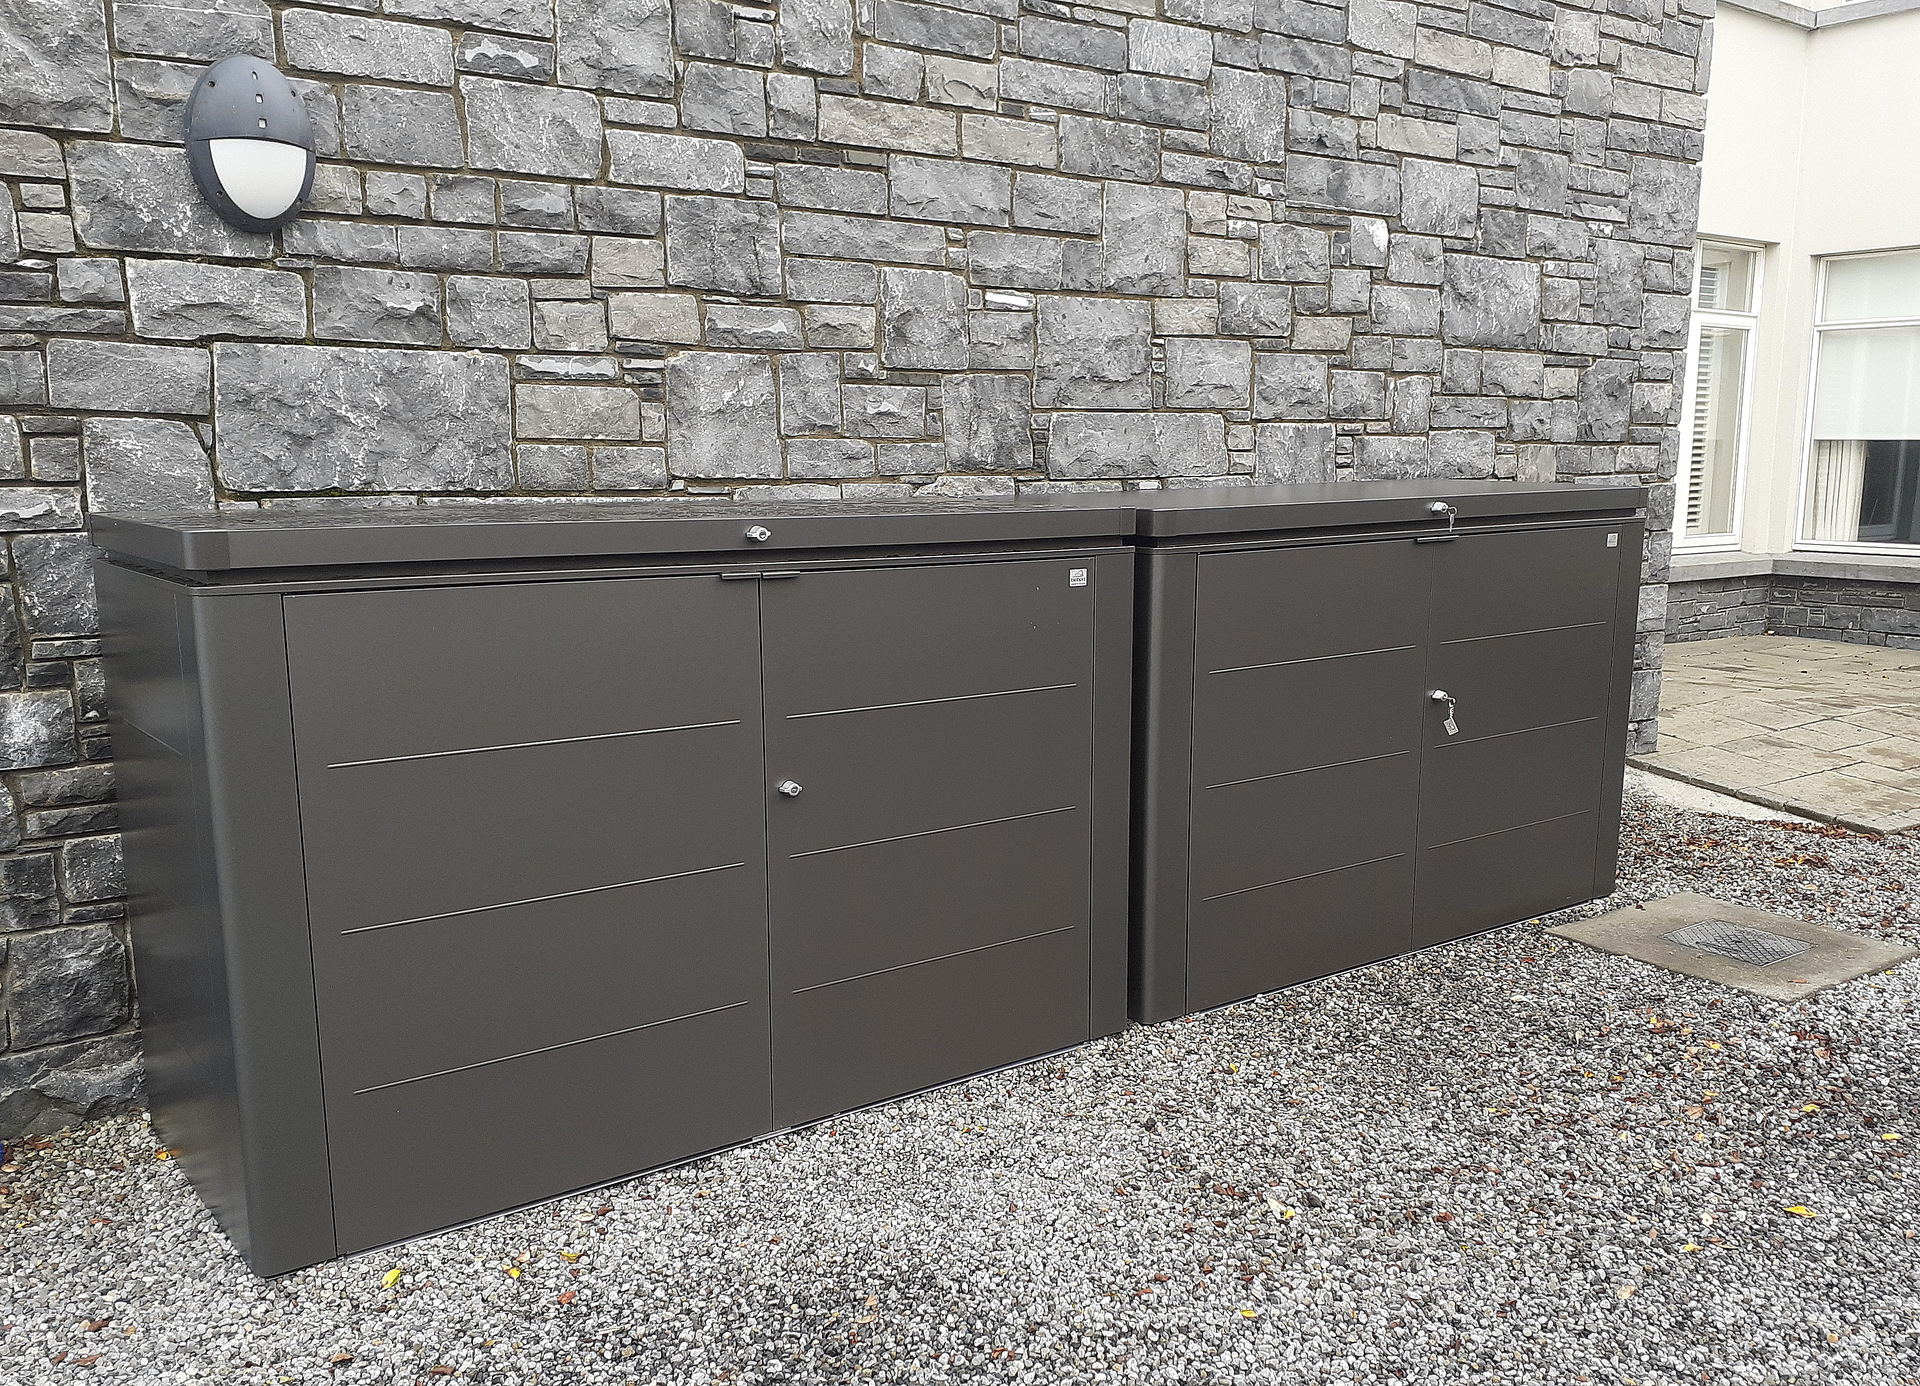 Premium quality, secure & rainproof Wheelie Bin & Bike Storage units - Biohort HighBoard 200  | Supplied + Installed in Skerries, Co Dublin.